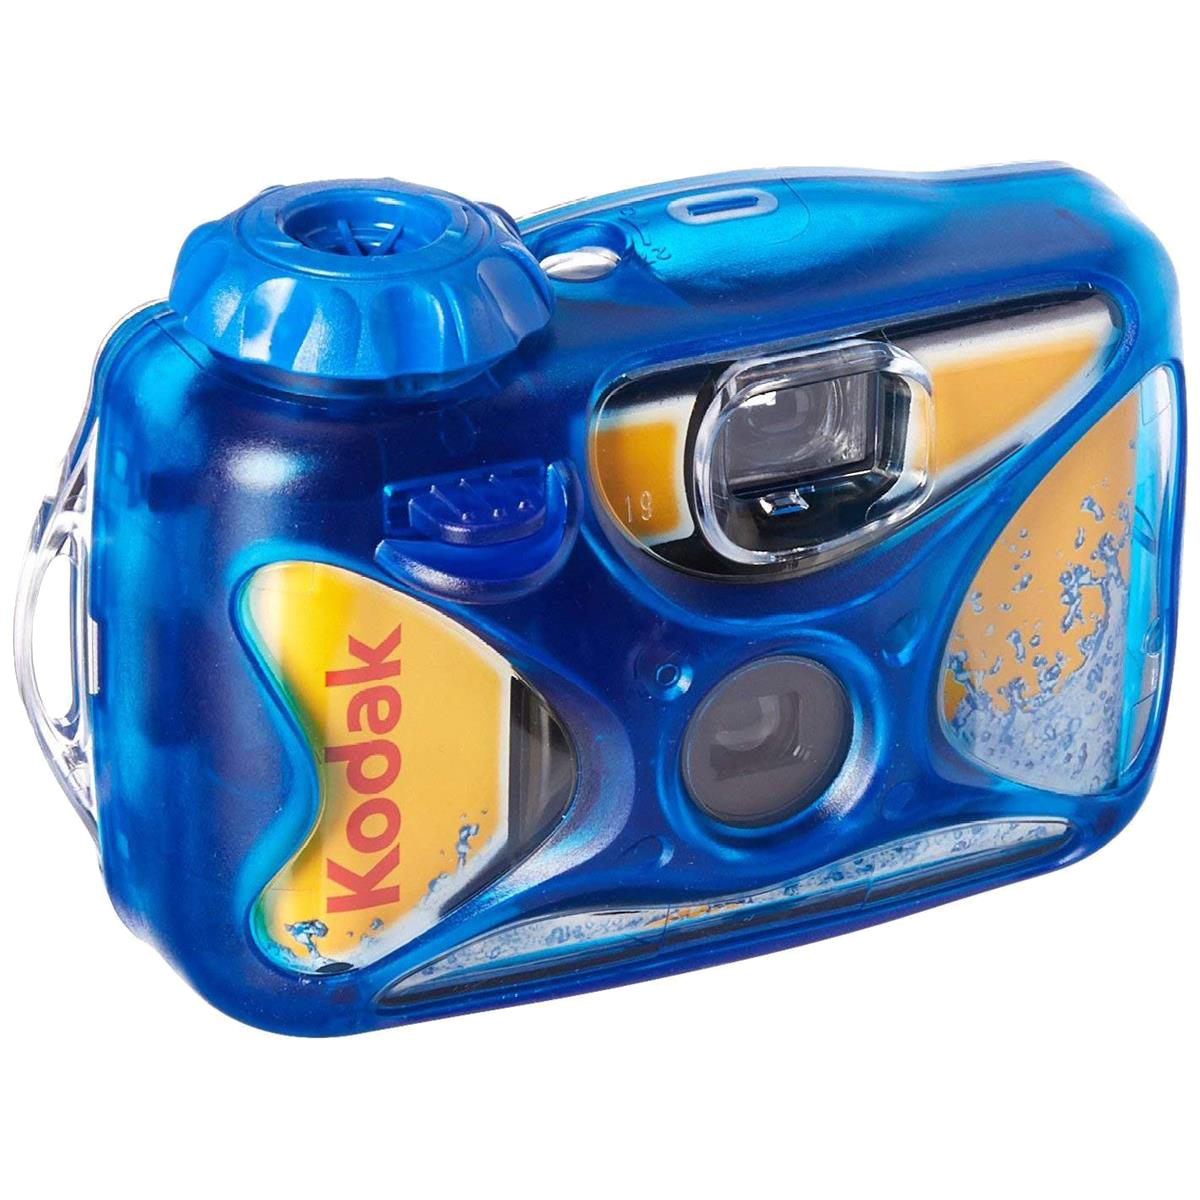 Kodak FUN SAVER FLASH CAMERA 27 ISO 800 - The Camera Trader